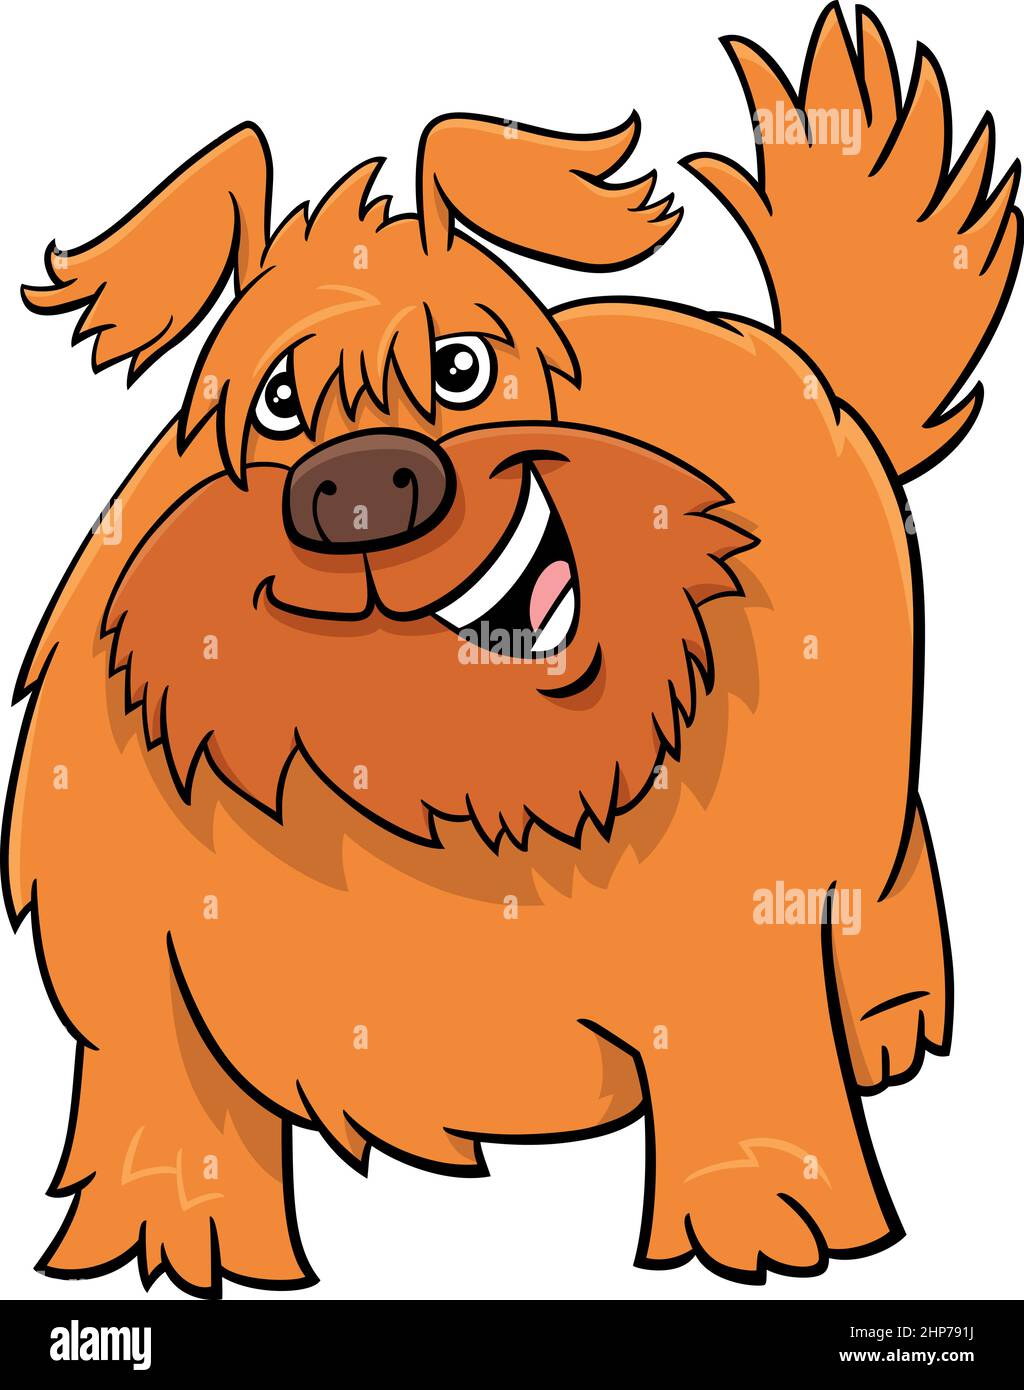 cartoon funny shaggy dog comic animal character Stock Vector Image